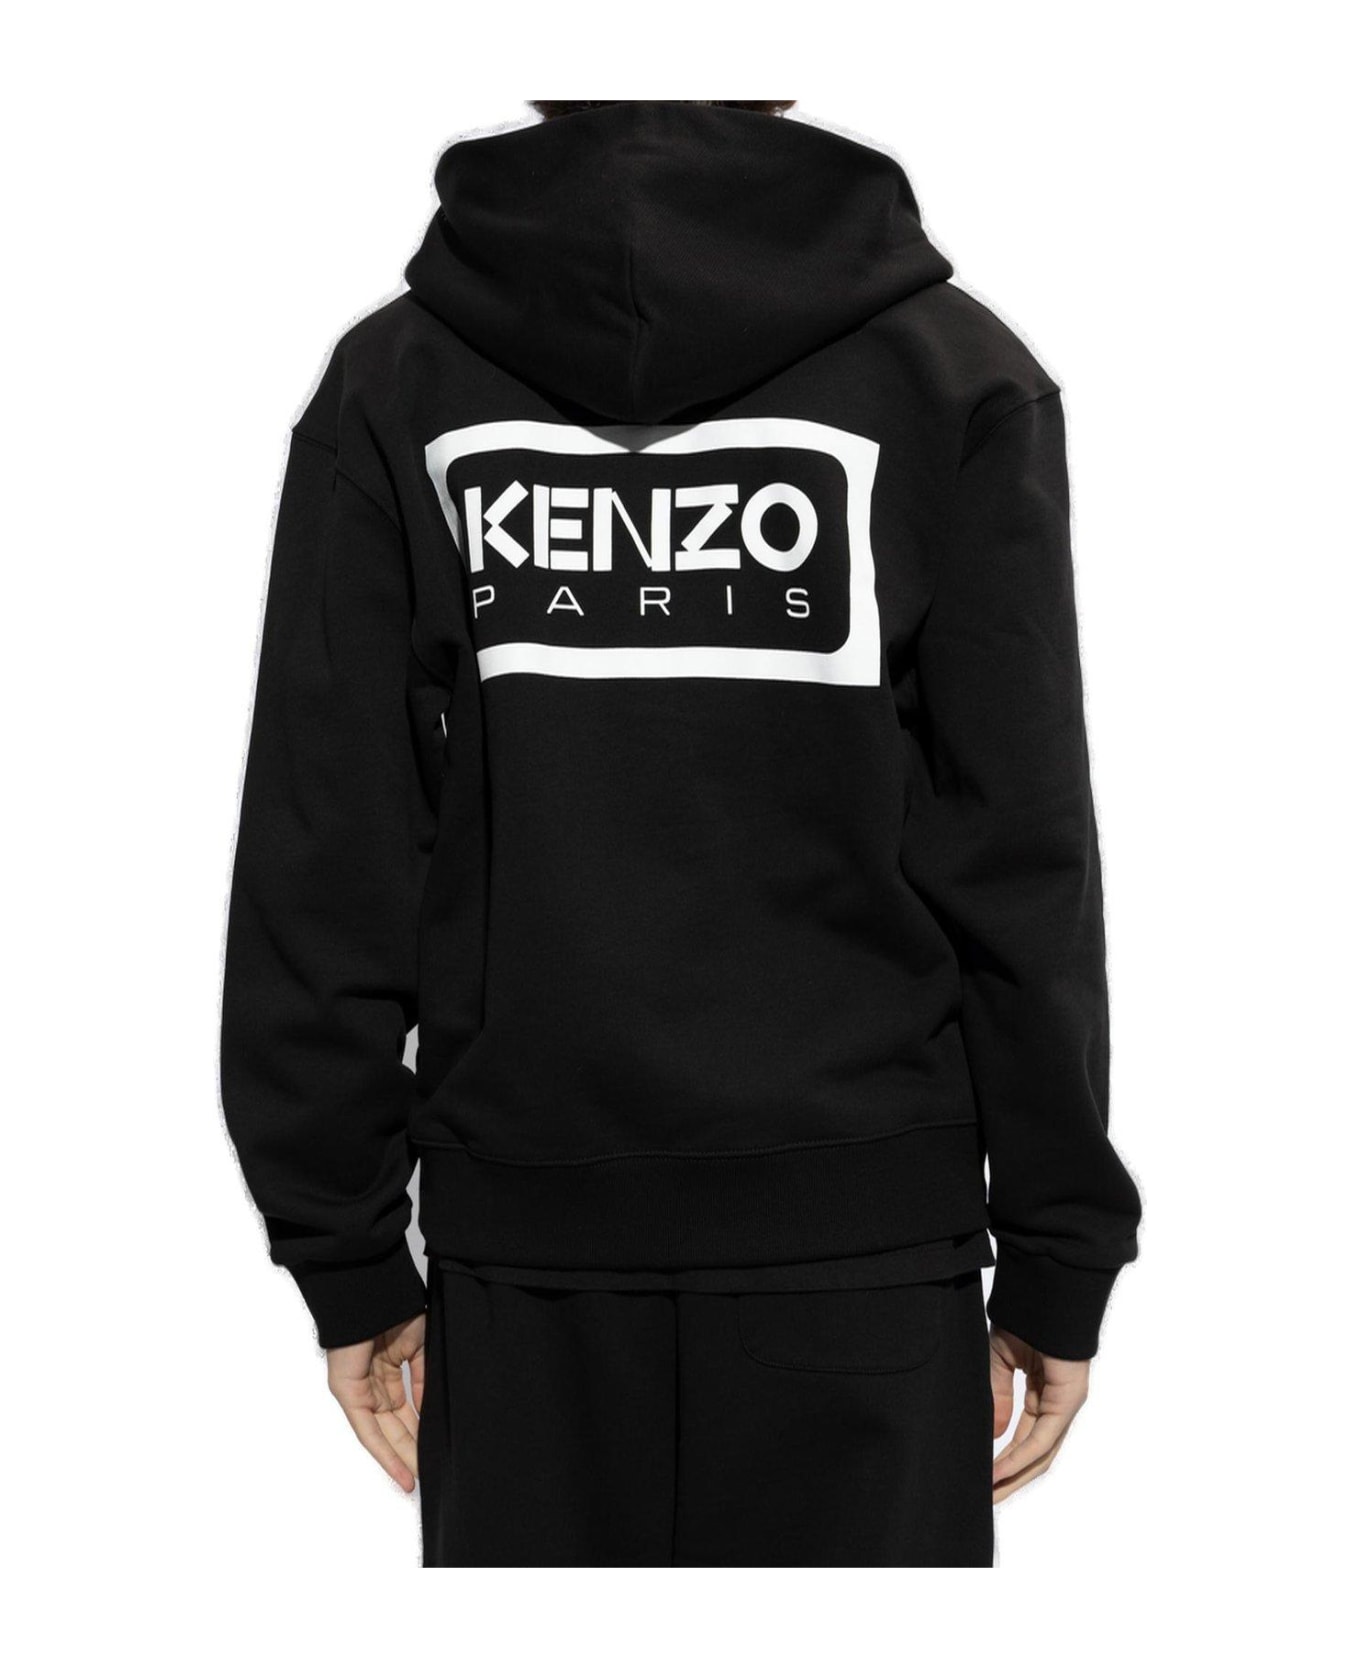 Kenzo Logo Embroidered Zip Up Hoodie - BLACK